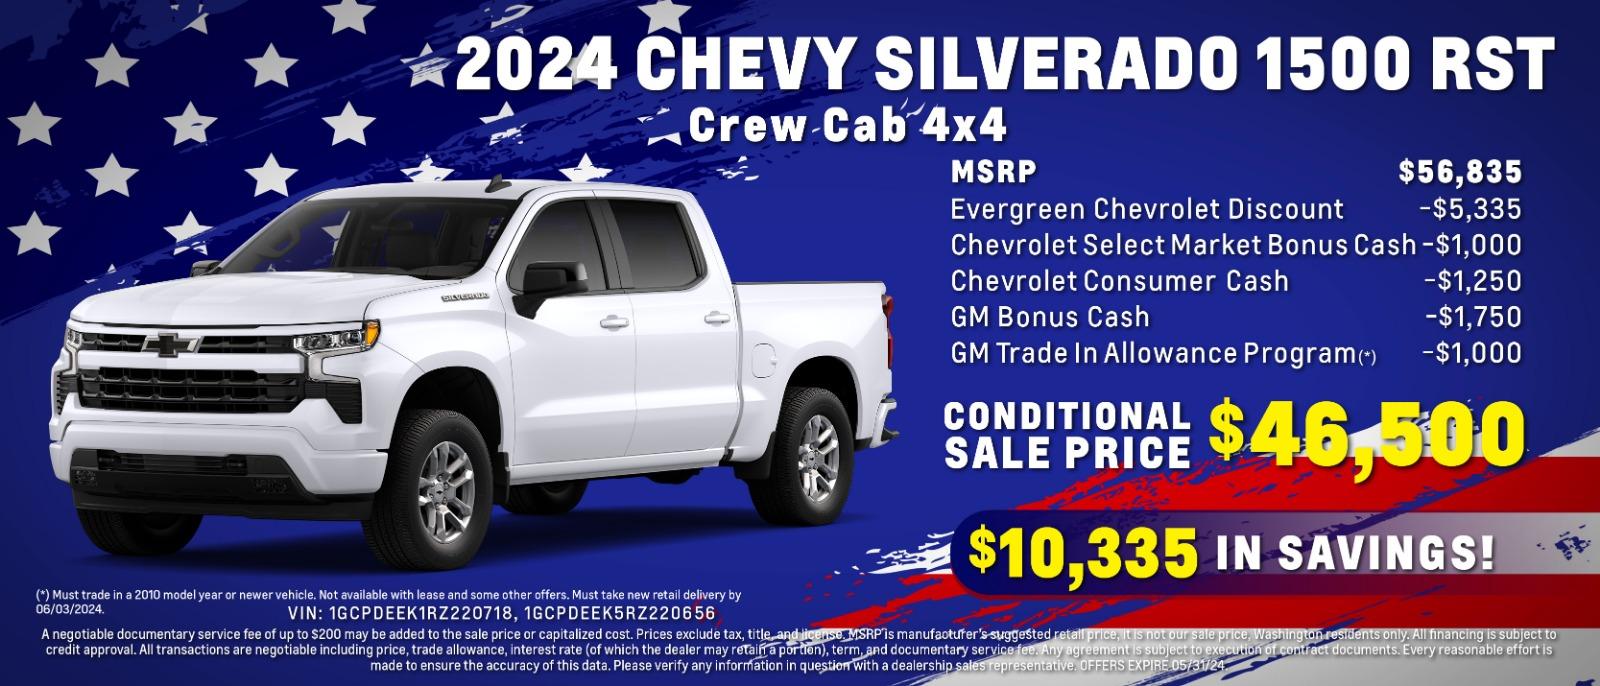 2024 Chevy Silverado 1500 RST Crew Cab 4x4